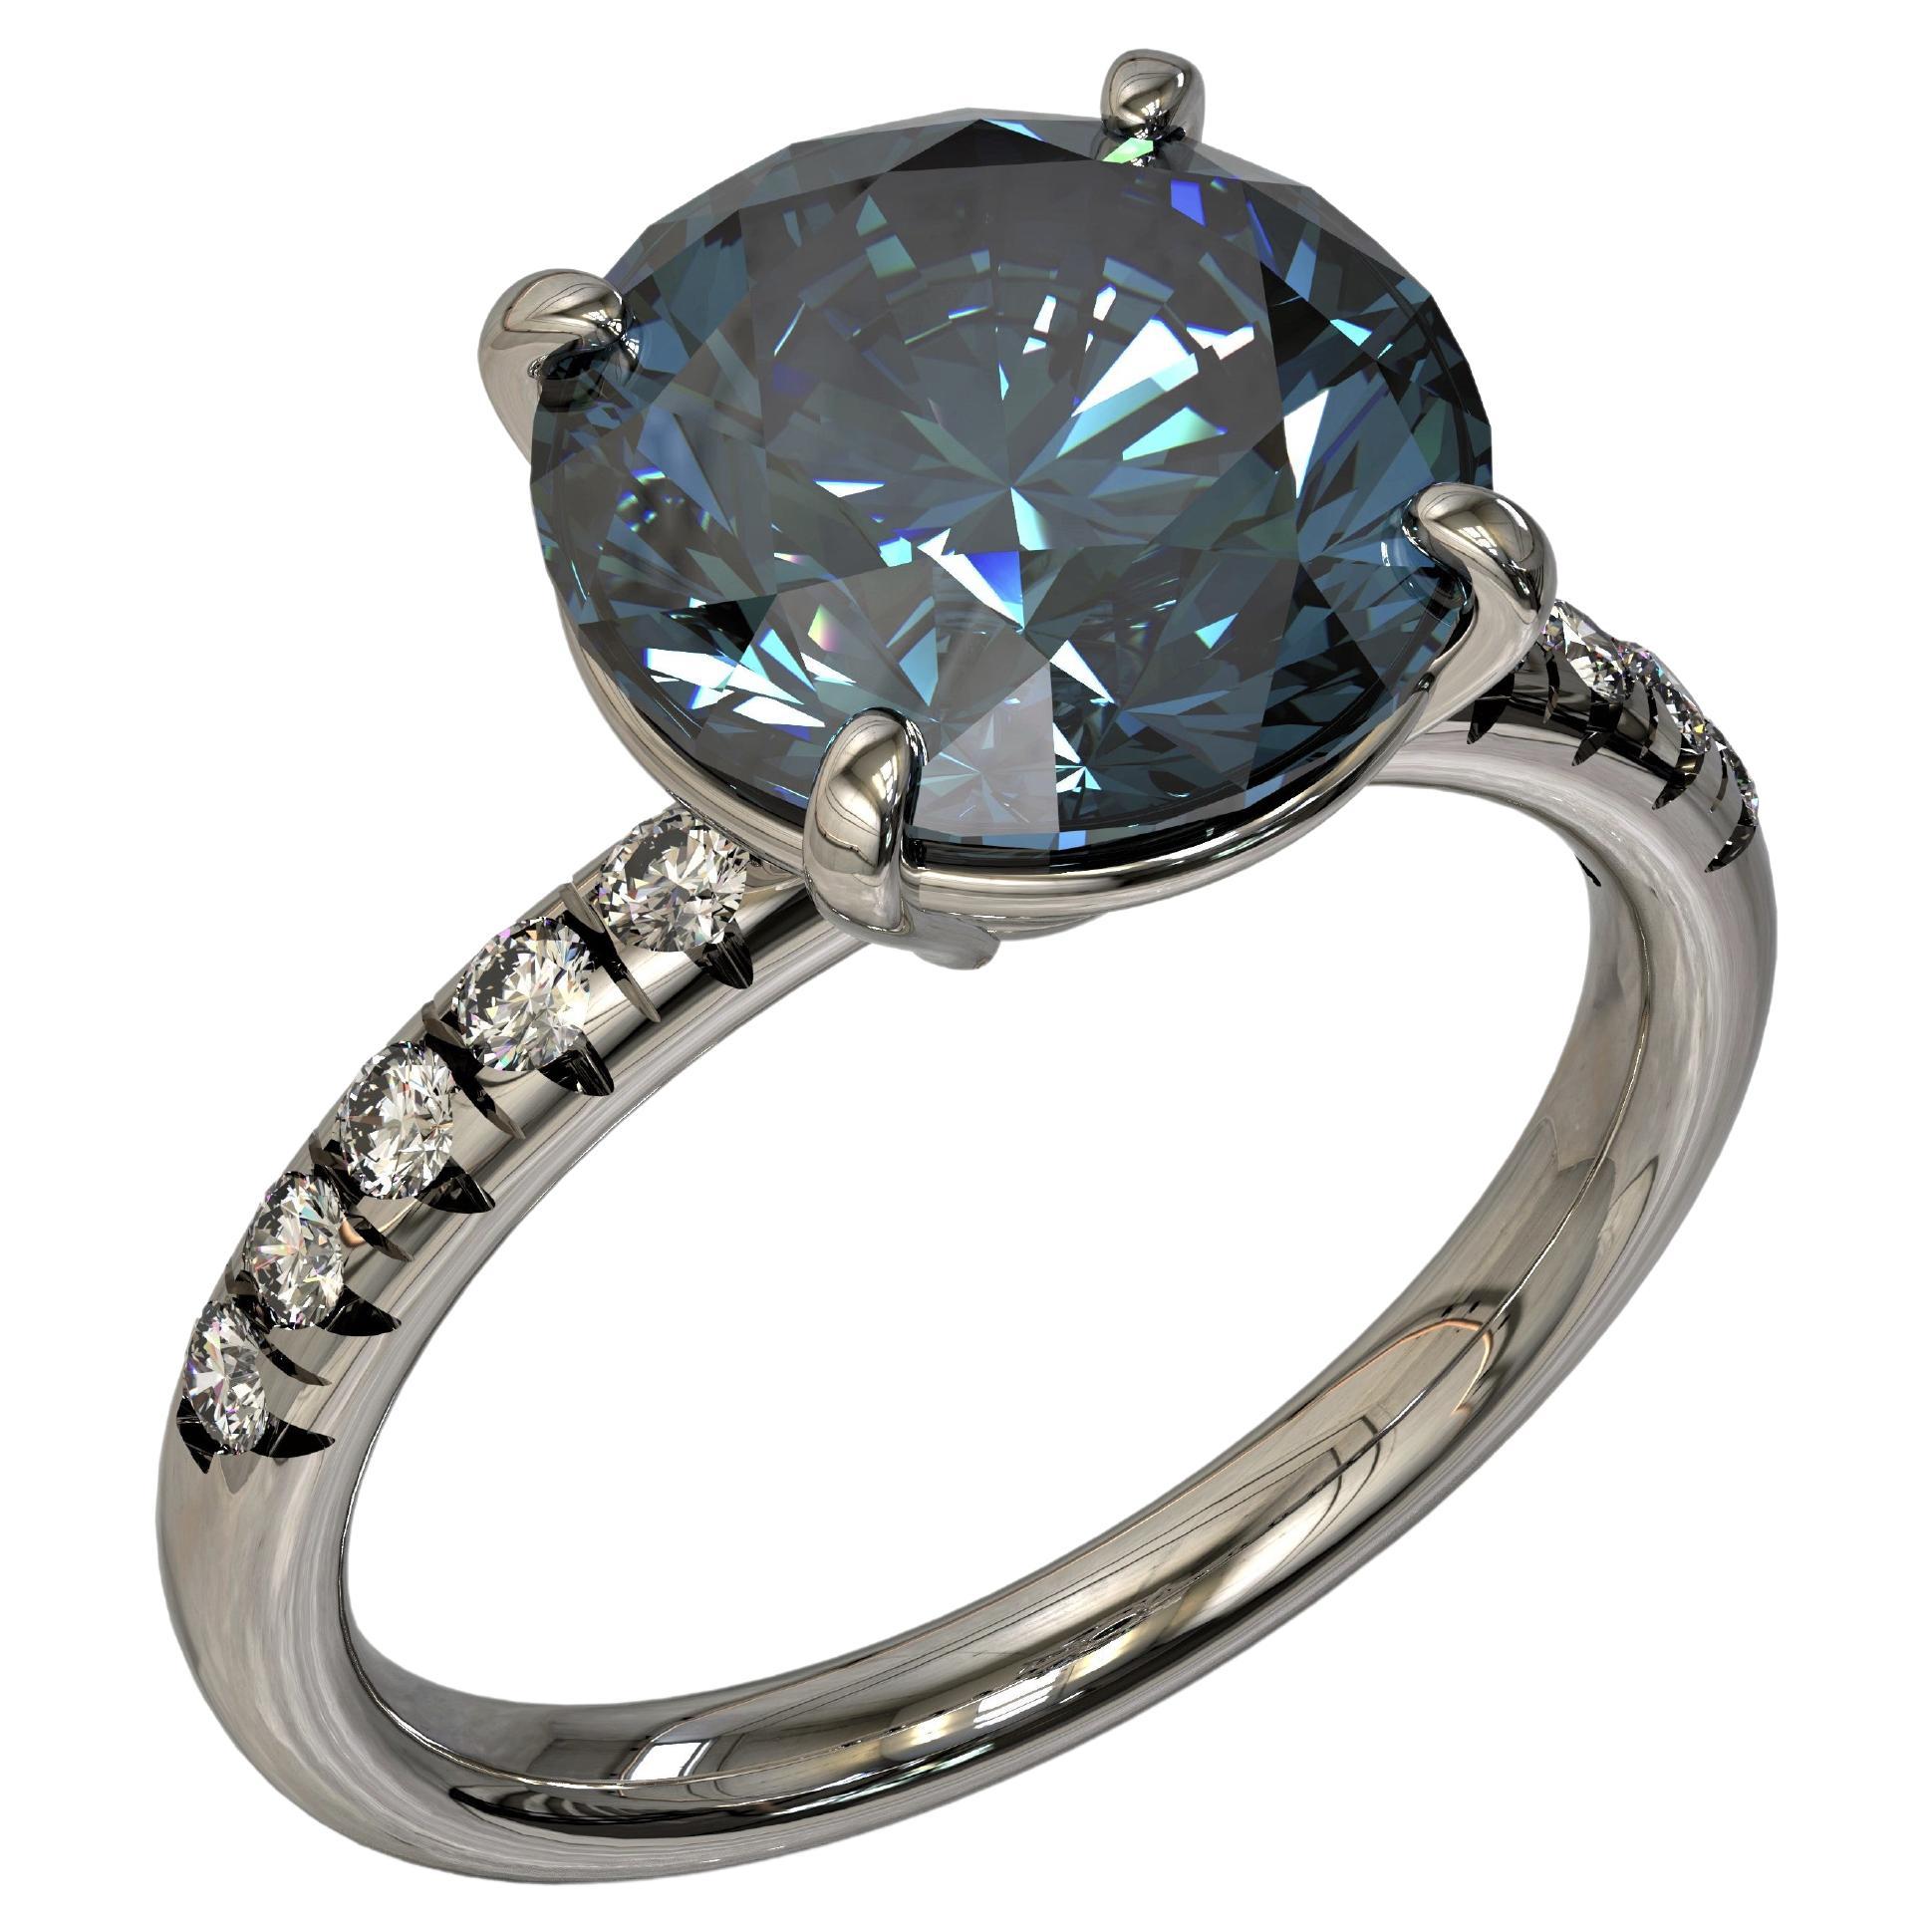 Kian Design 3.81 Carat Natural Topaz Diamond Engagement Ring In Platinum For Sale